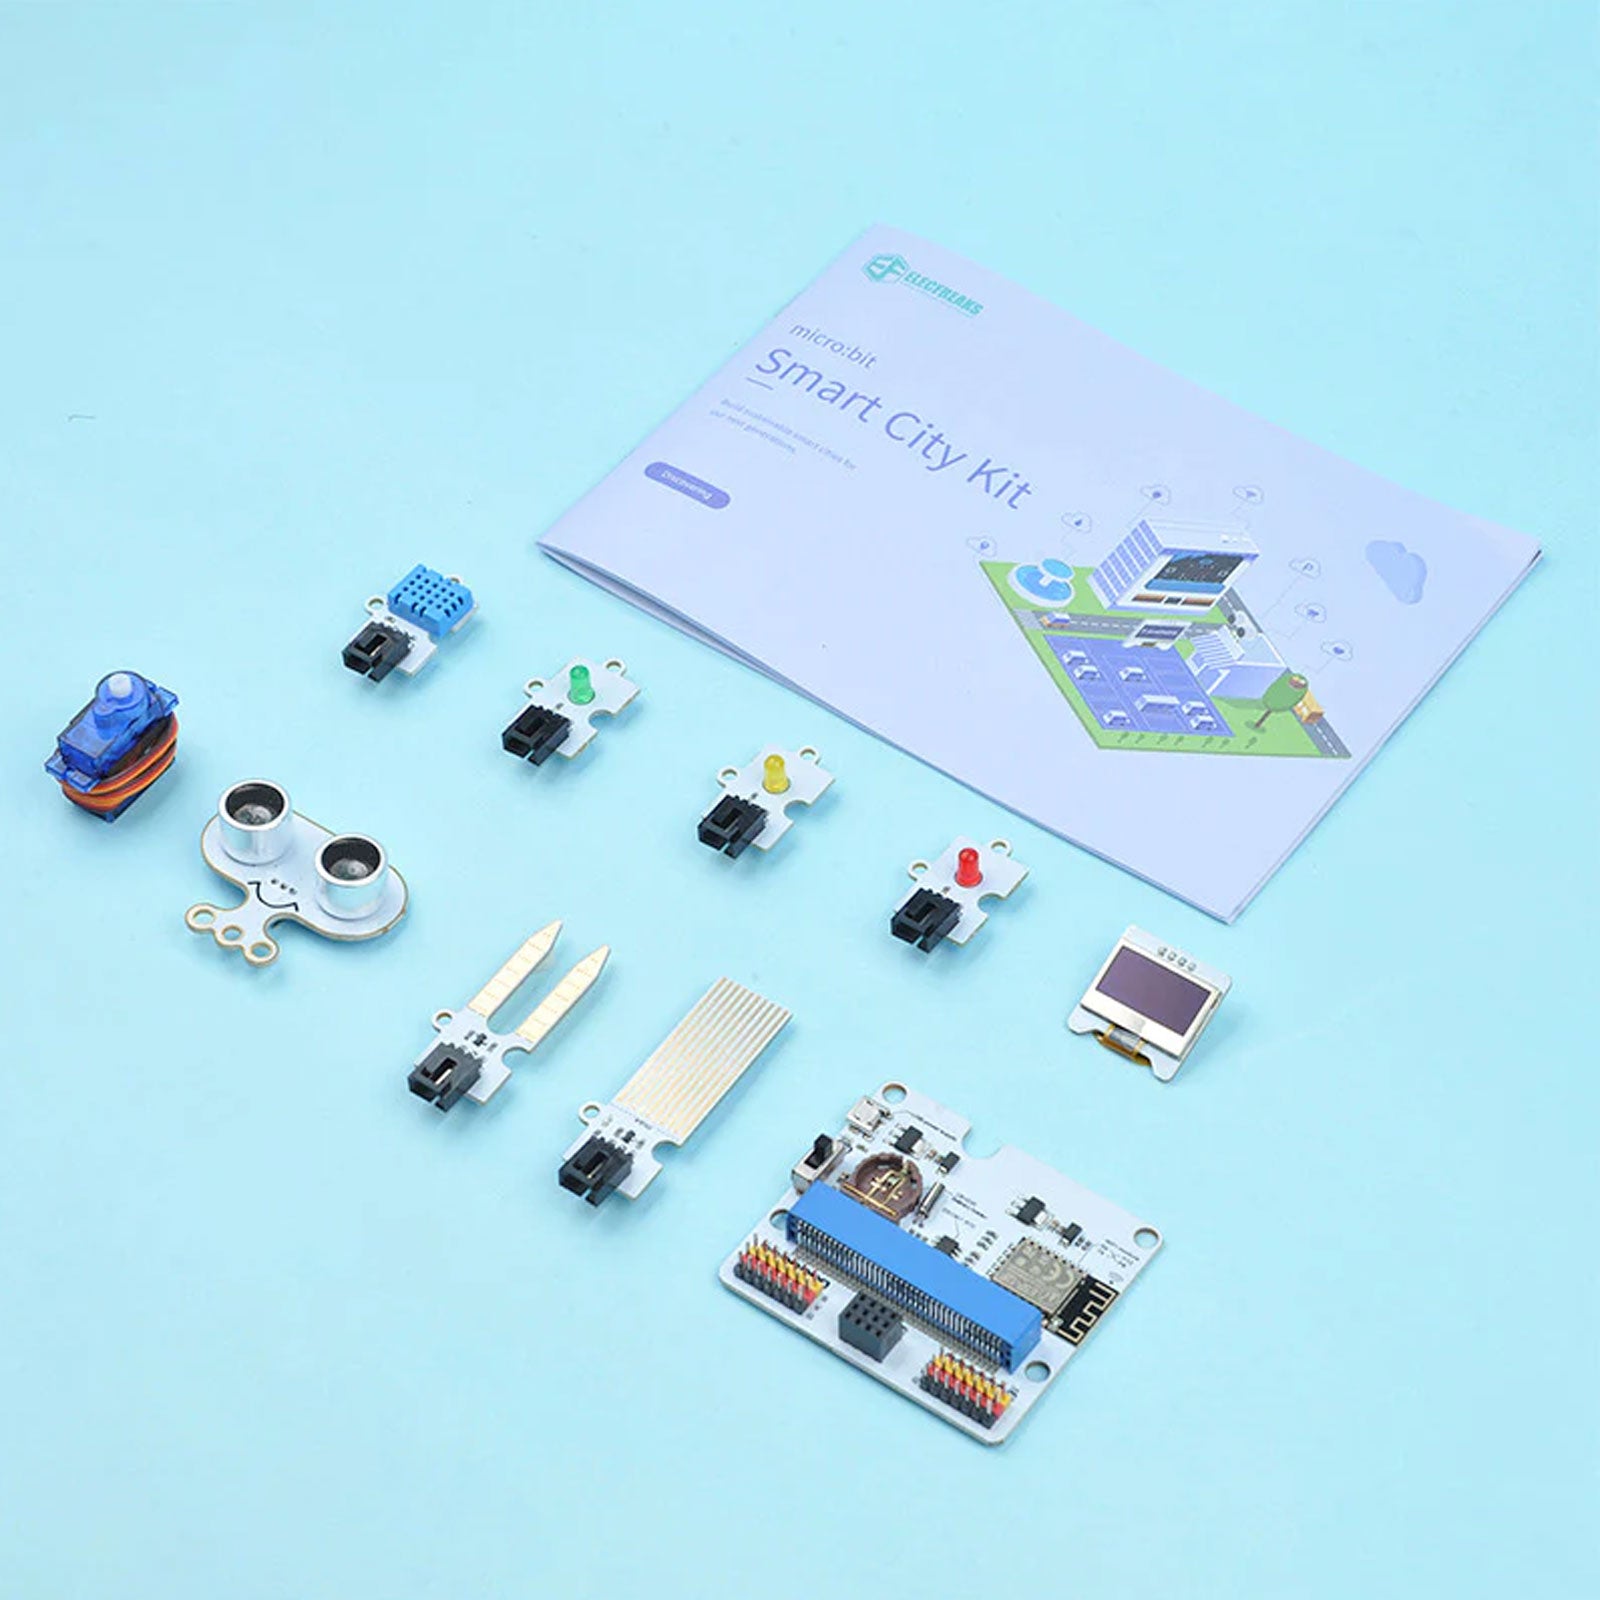 ELECFREAKS micro:bit Smart City Kit, micro:bit Sensor Starter Kit For Kid with Sensors (Without micro:bit Board)